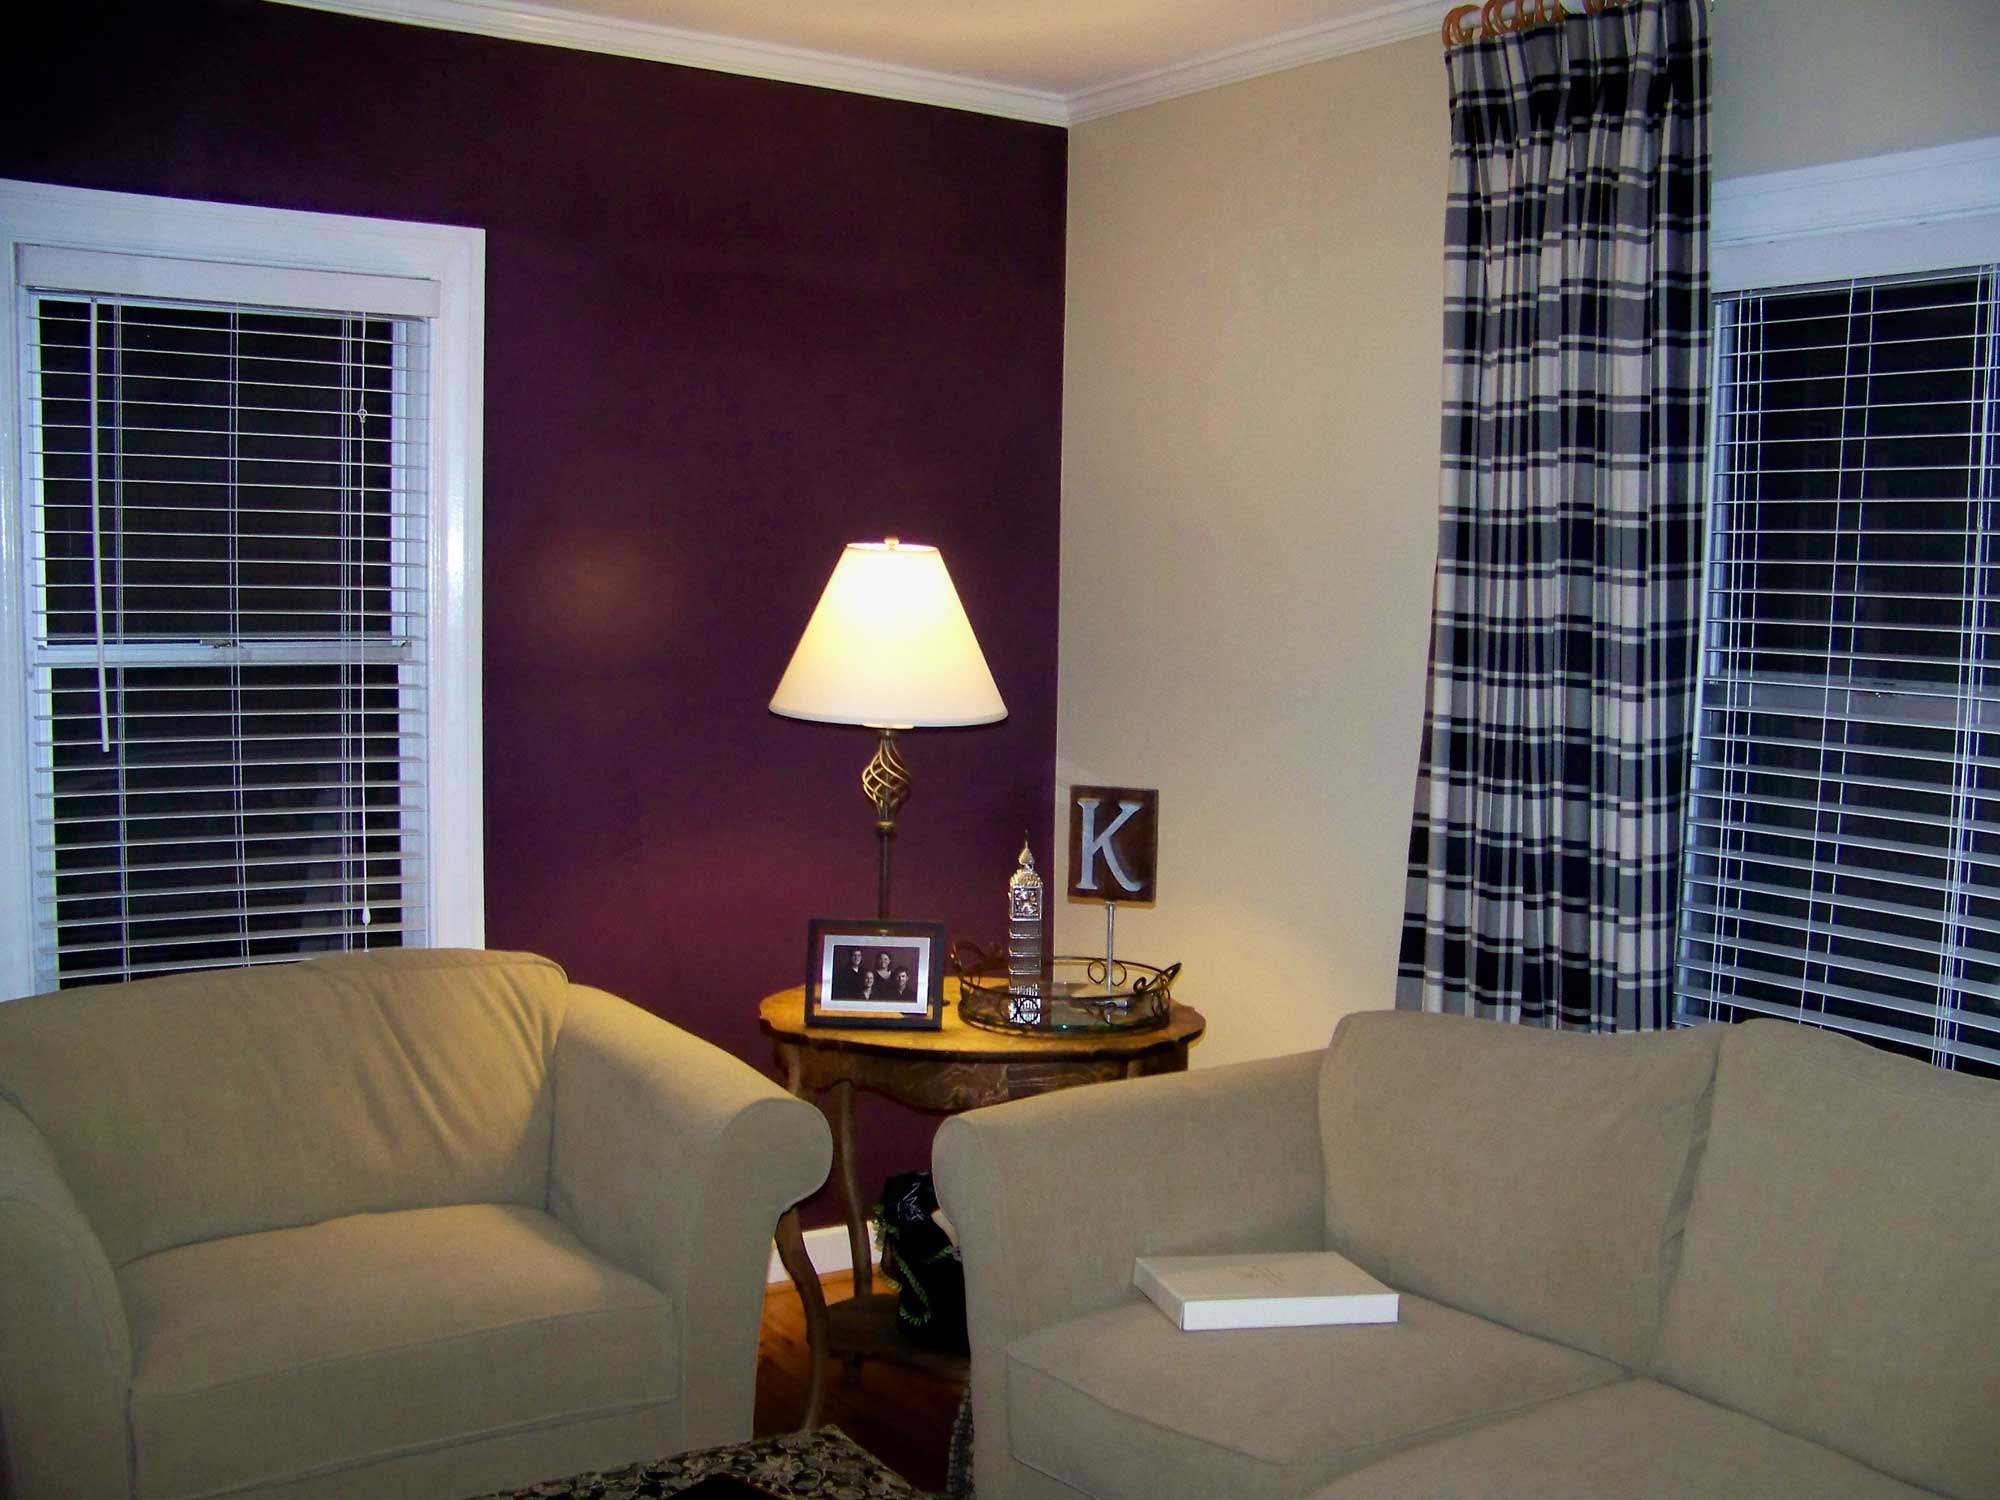 Gabungan warna ungu dan krim lembut serta sofa kelabu untuk ruang tamu nampak lebih gah